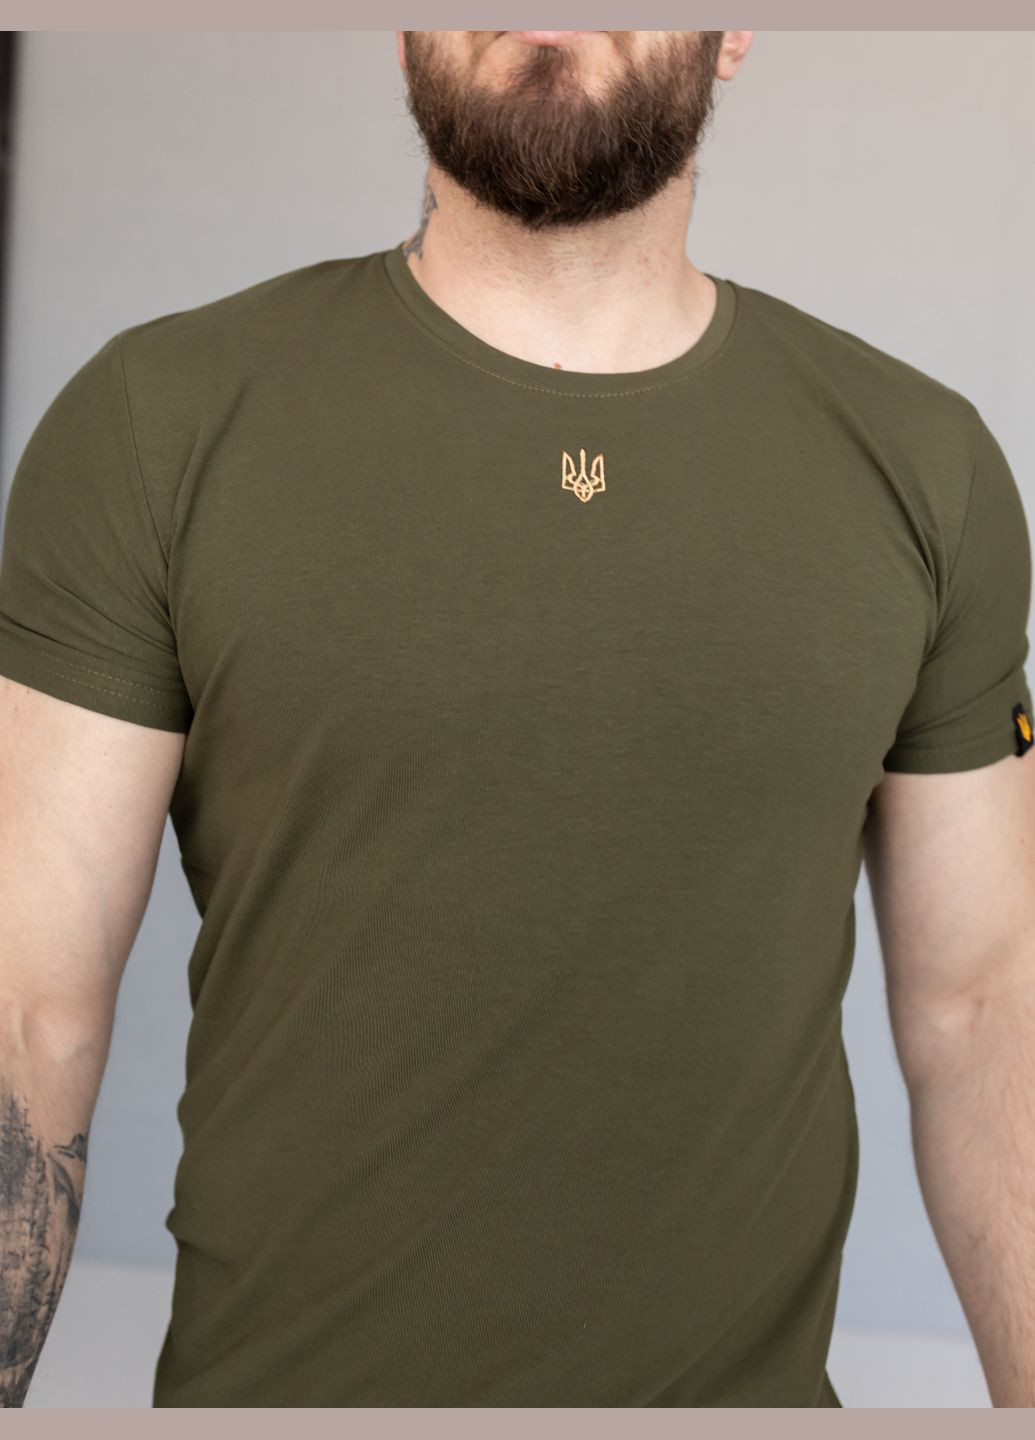 Хаки (оливковая) мужская футболка с гербом 100% хлопок xs - 3xl On mee